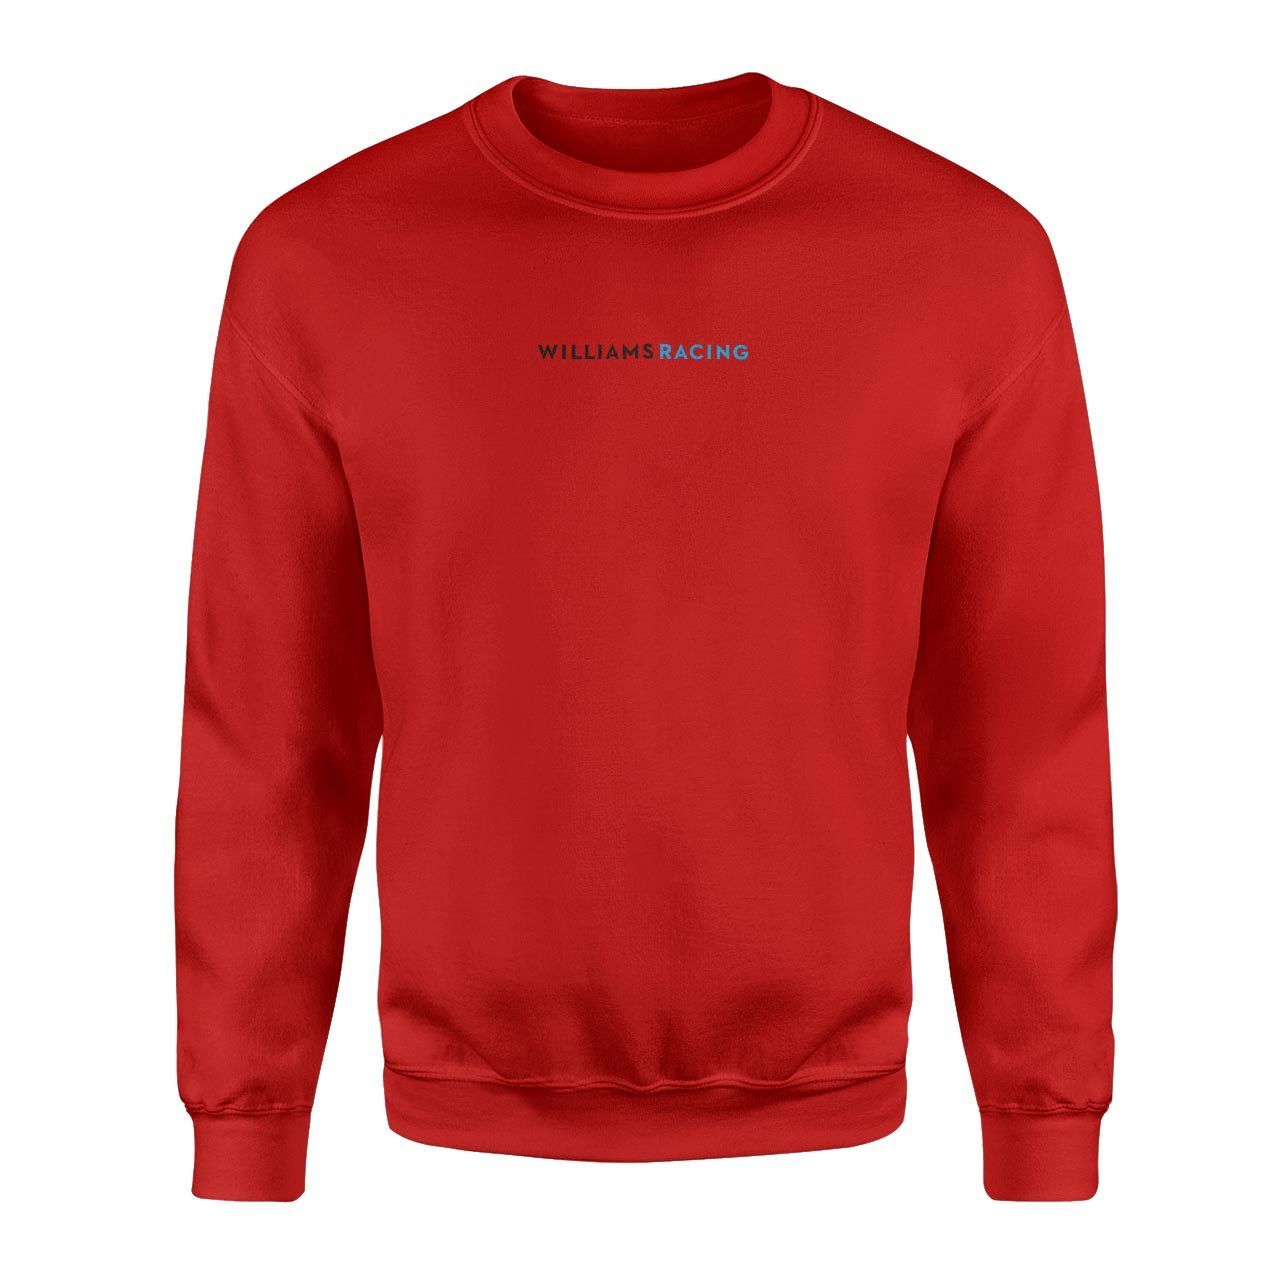 Williams Racing Text Kırmızı Sweatshirt